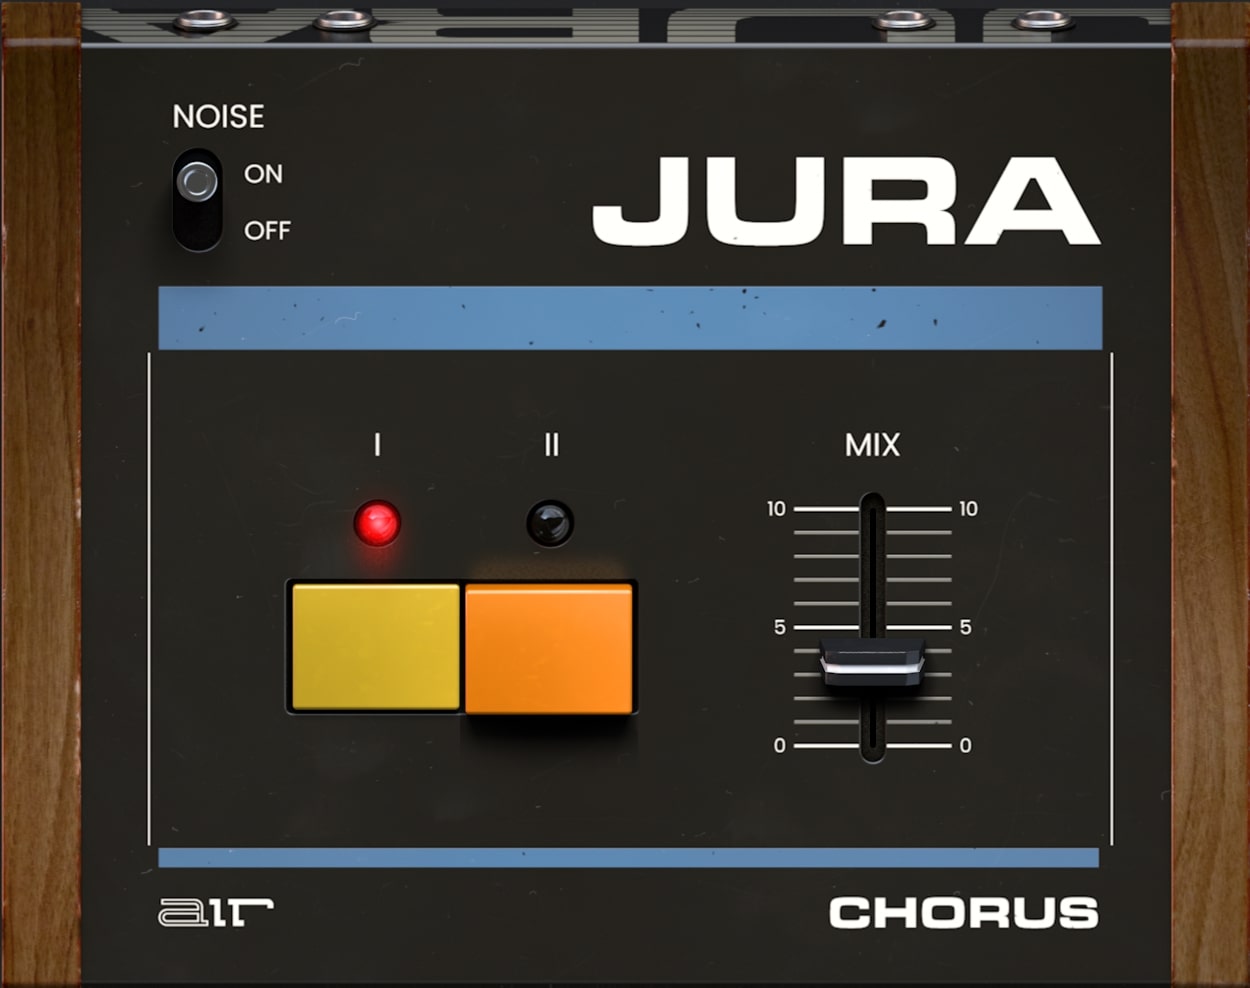 Jura Chorus product image